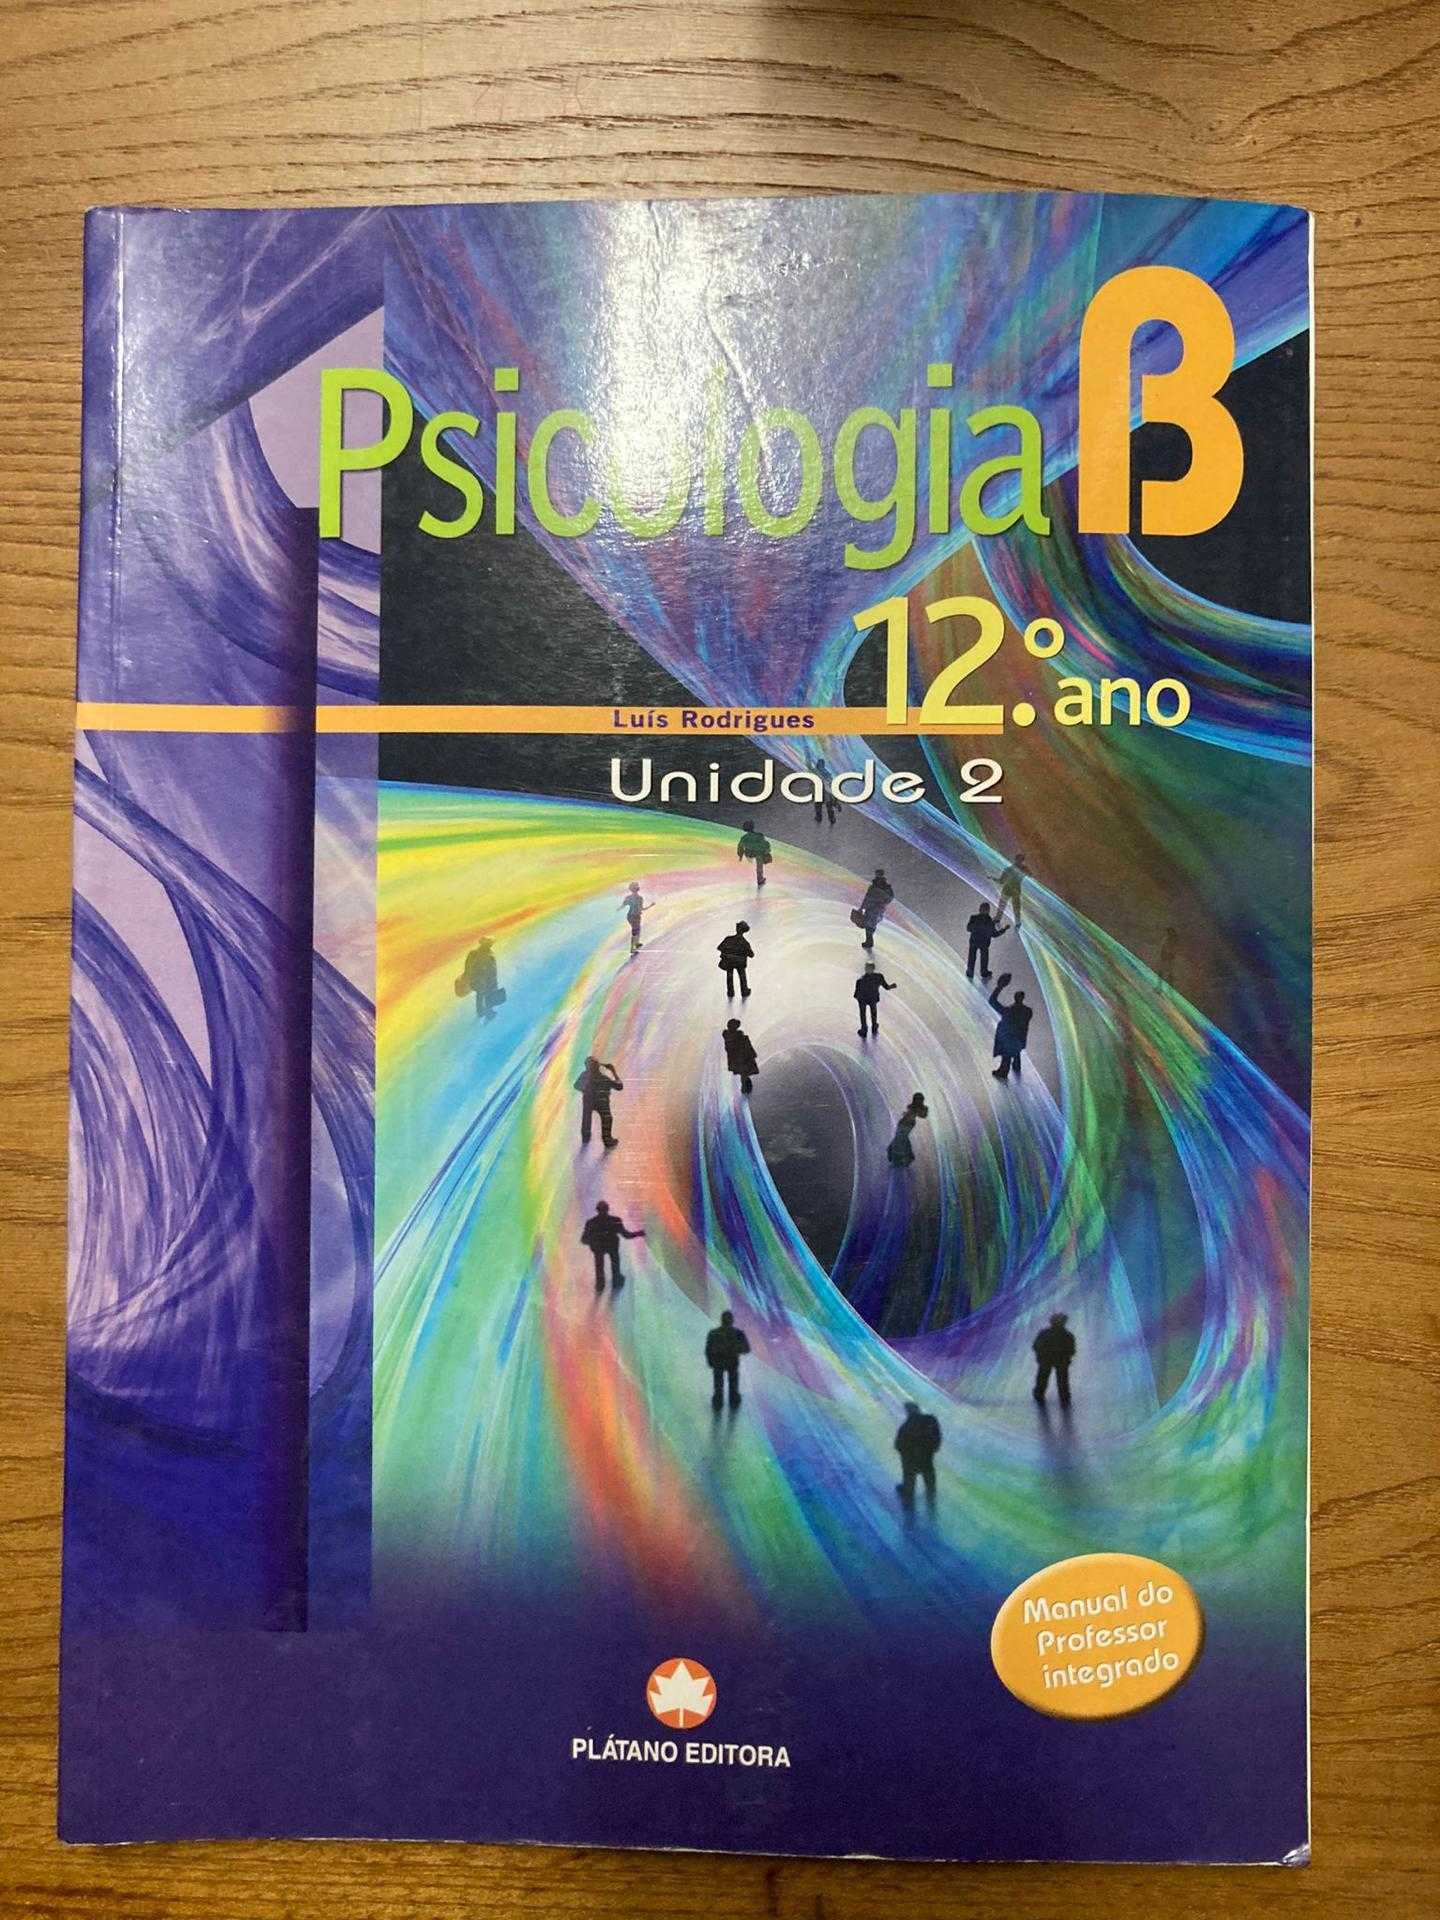 Psicologia B - Unidade 2 (Plátano Editores) - 12º Ano